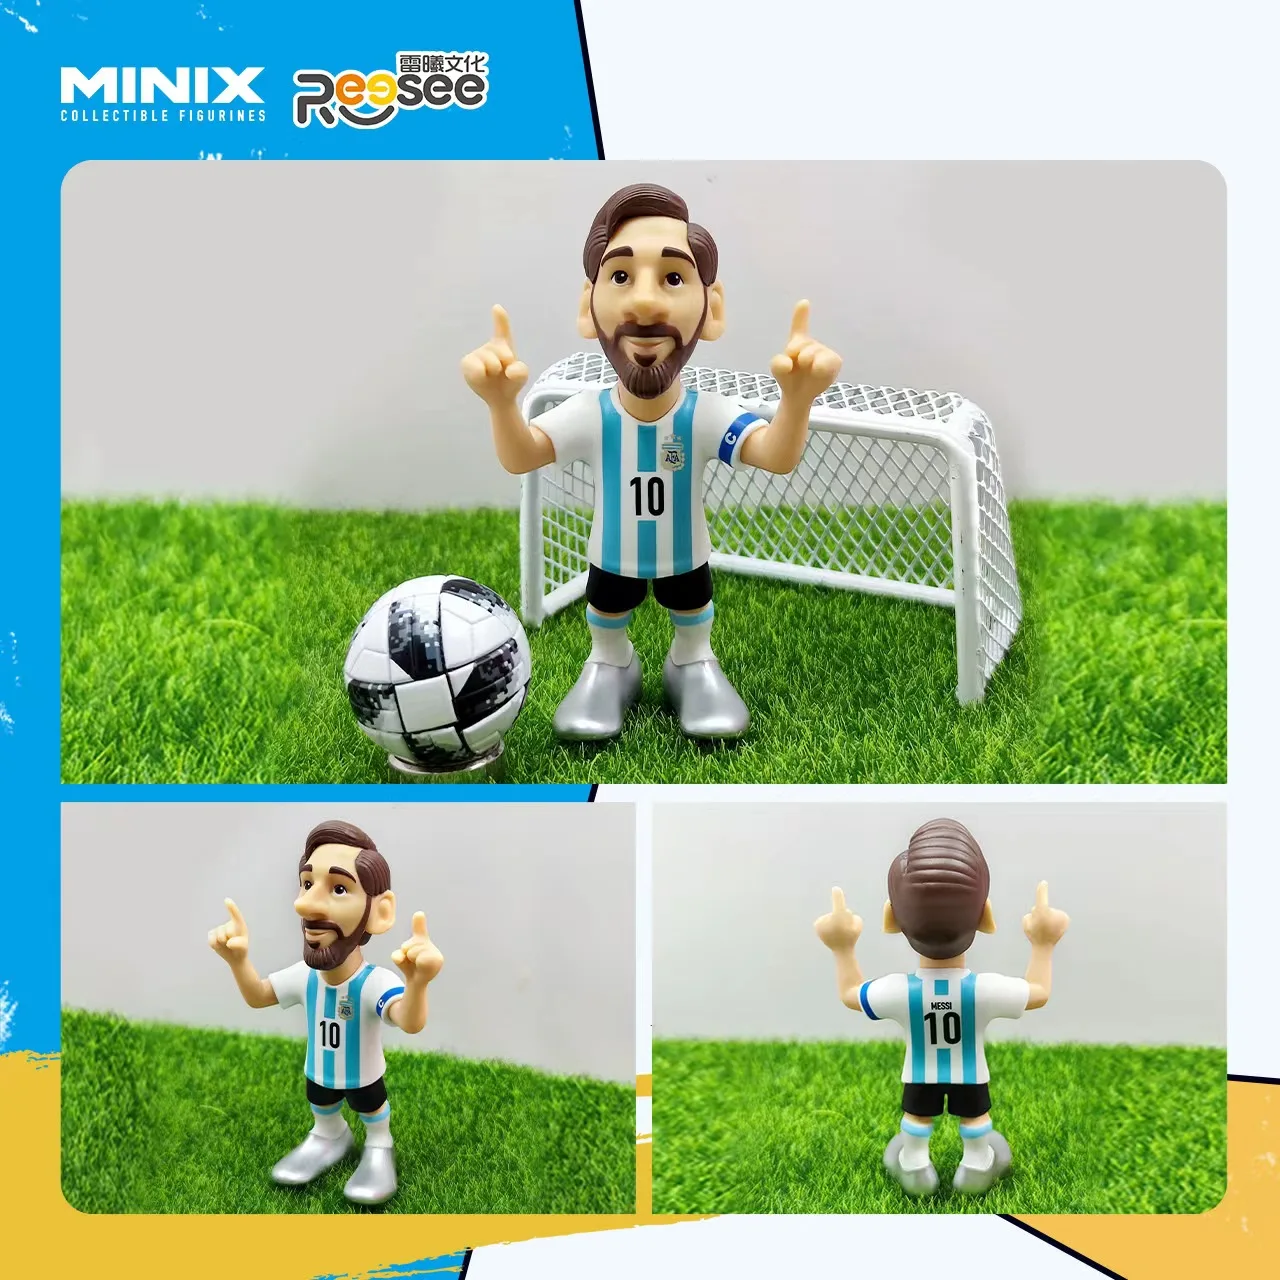 Minix Mbappé Collectible Figurine Football Star Figure International